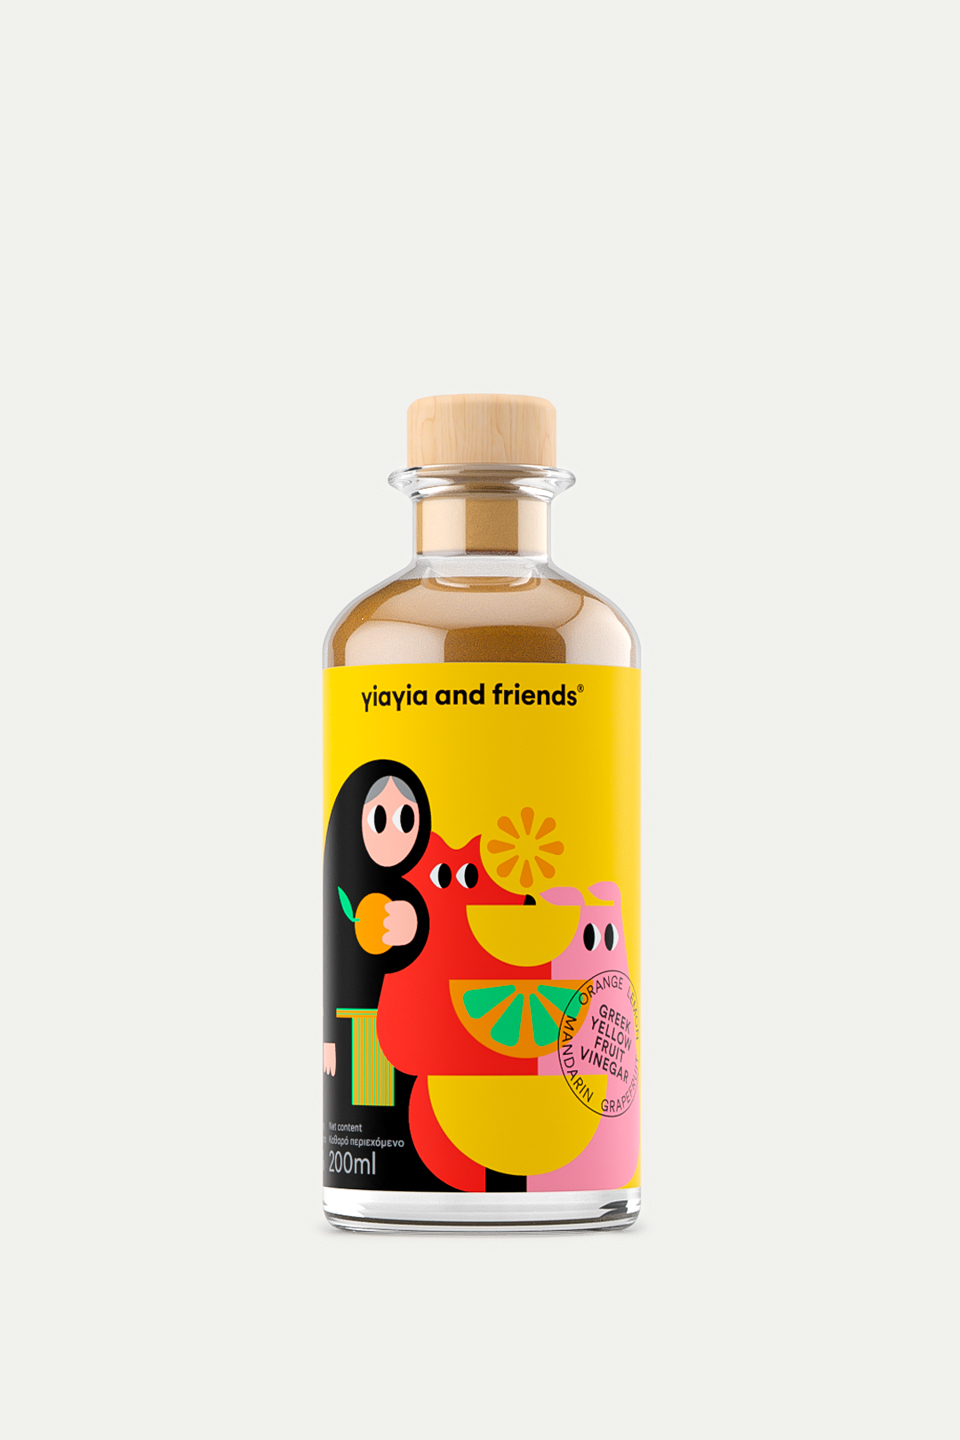 Greek yellow fruit vinegar - Yiayia and friends